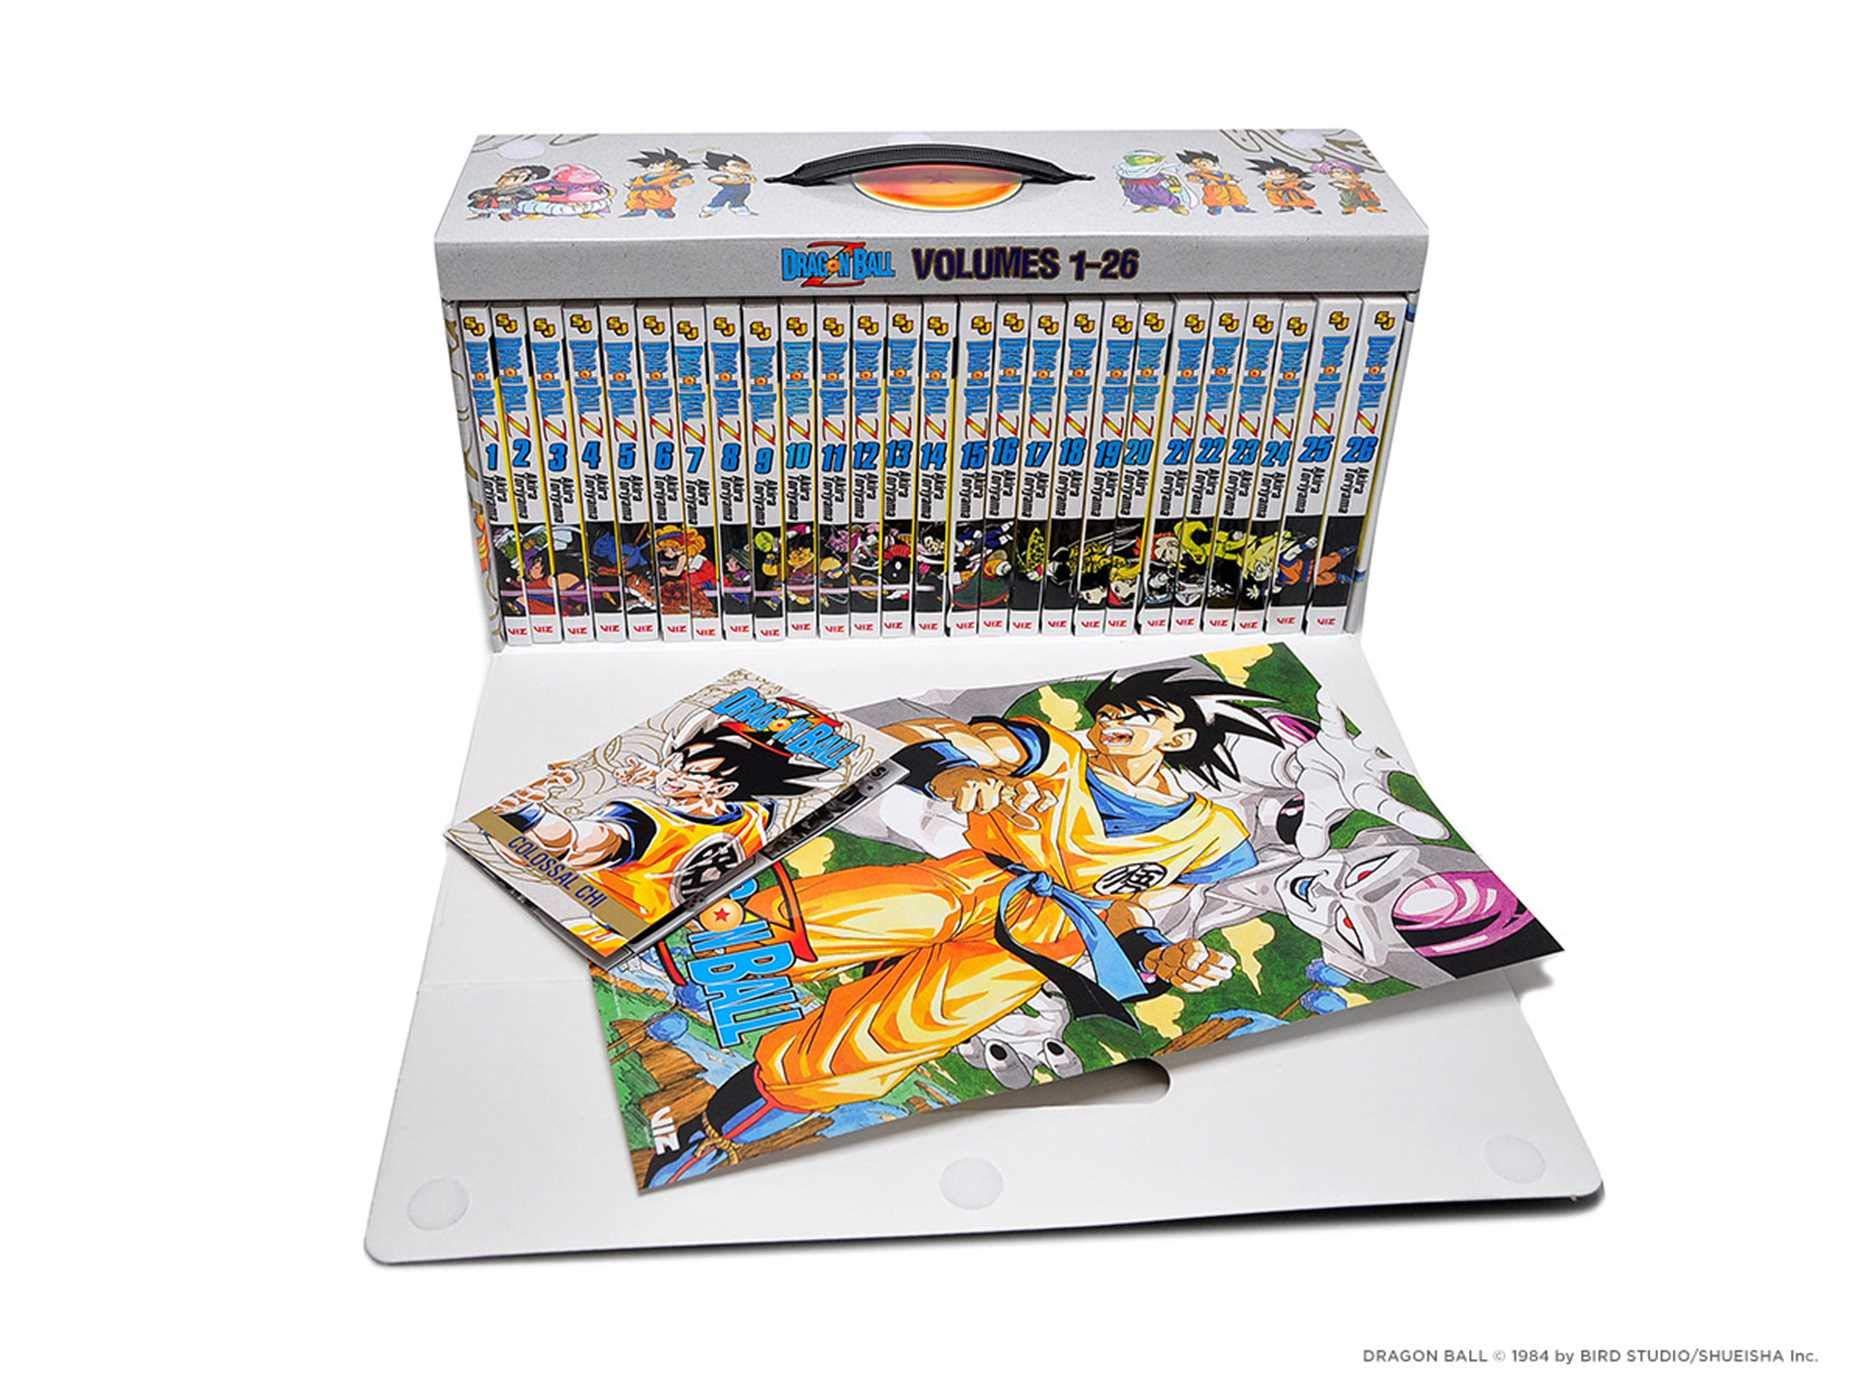 Dragon Ball Z by Akira Toriyama Vol. 1-26 Complete Box Set - Manga - Paperback